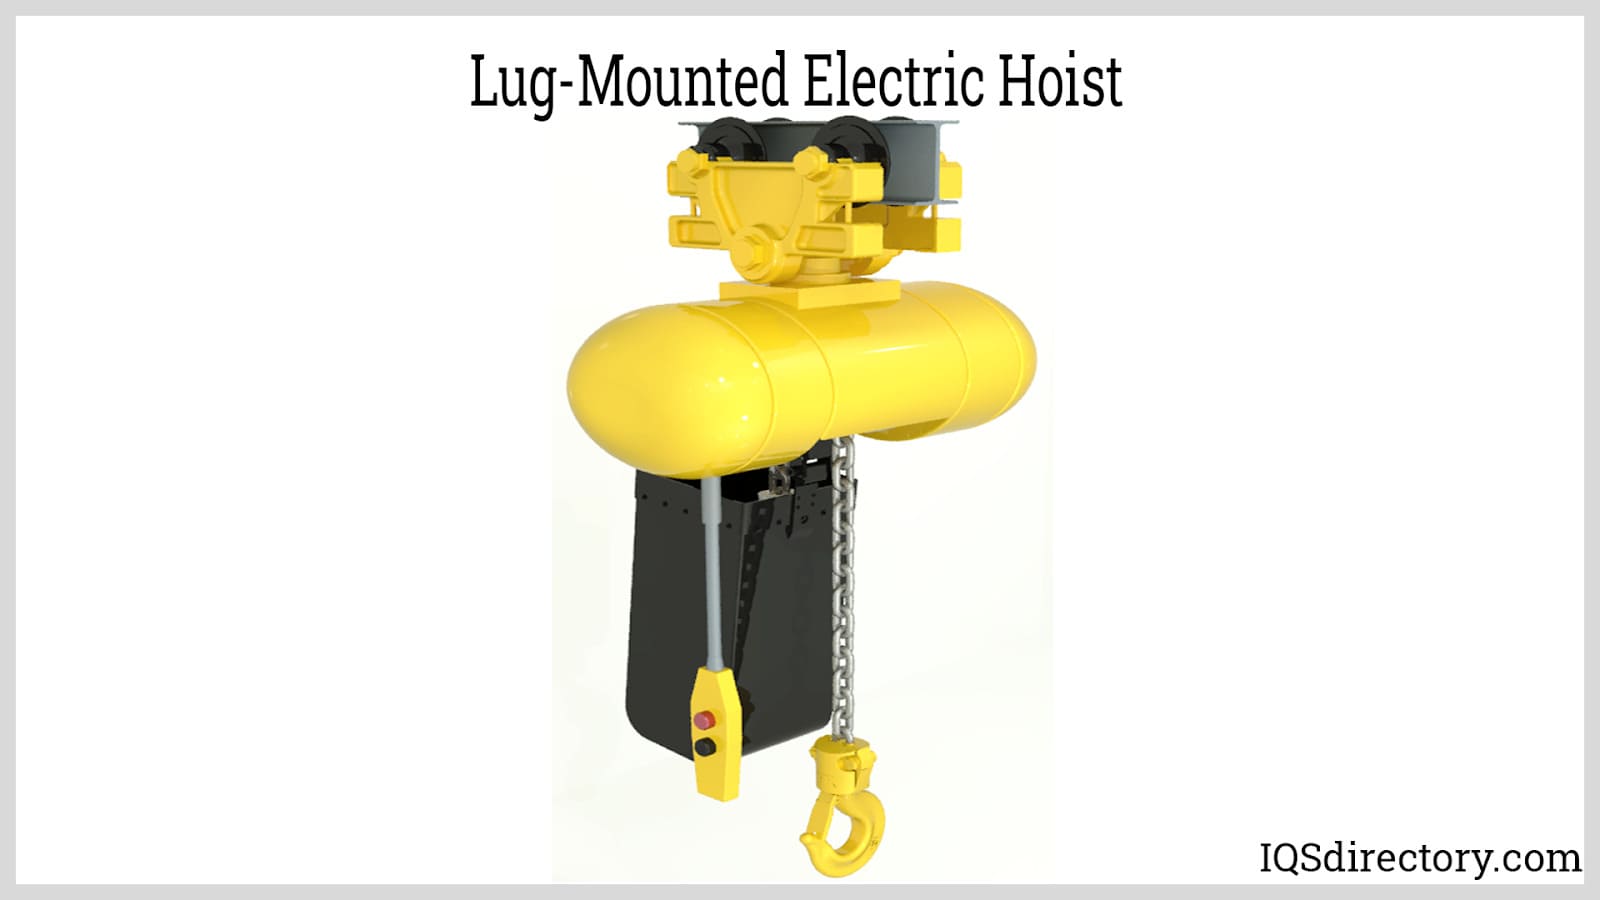 Lug-Mounted Electric Hoist